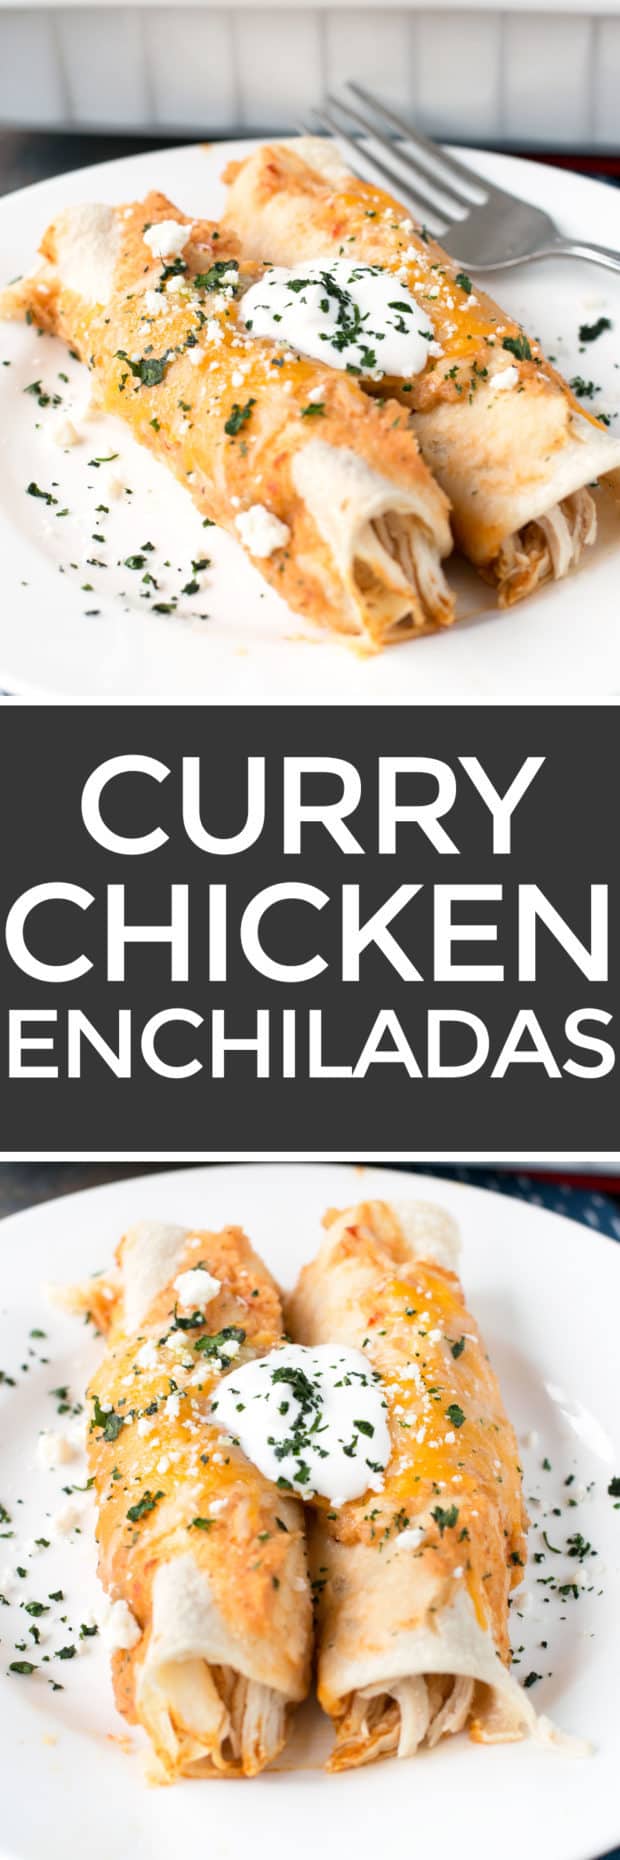 Curry Chicken Enchiladas | cakenknife.com #weeknightdinner #dinner #enchiladas #mexican